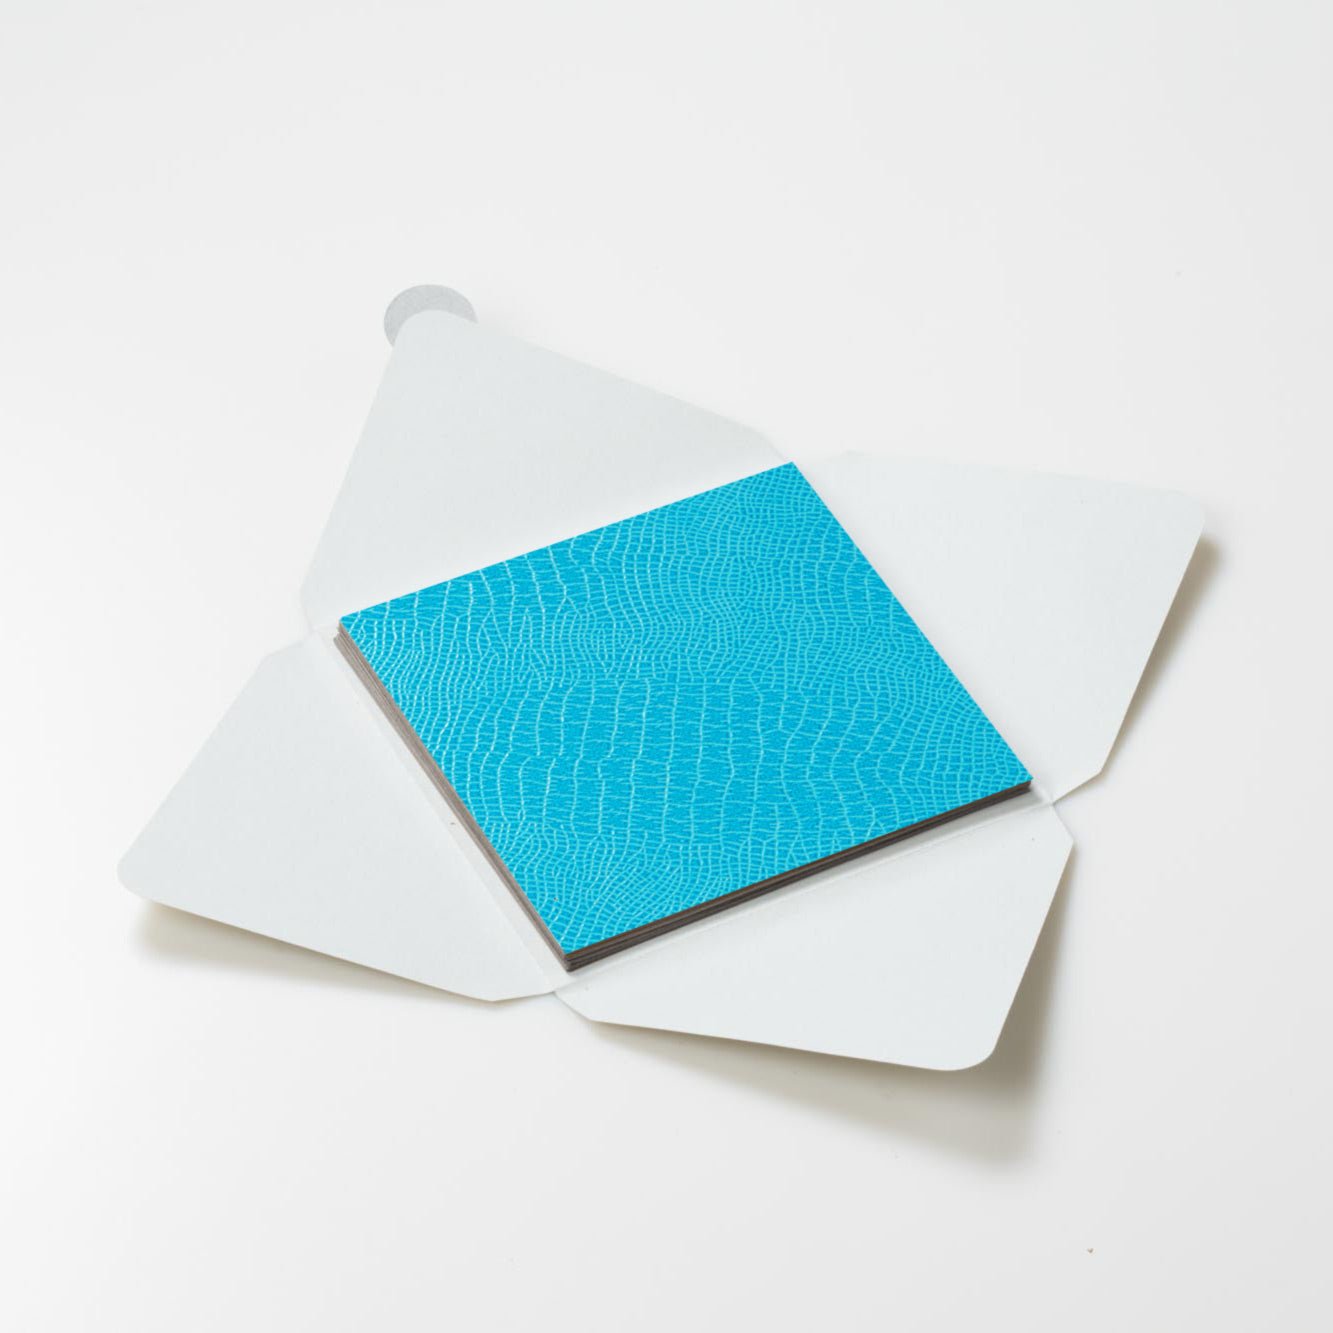 Kit di fogli "Lucertola Azzurro" formato origami 15 cm x 15 cm - Manamant Paper Tales -FG0463775M2D